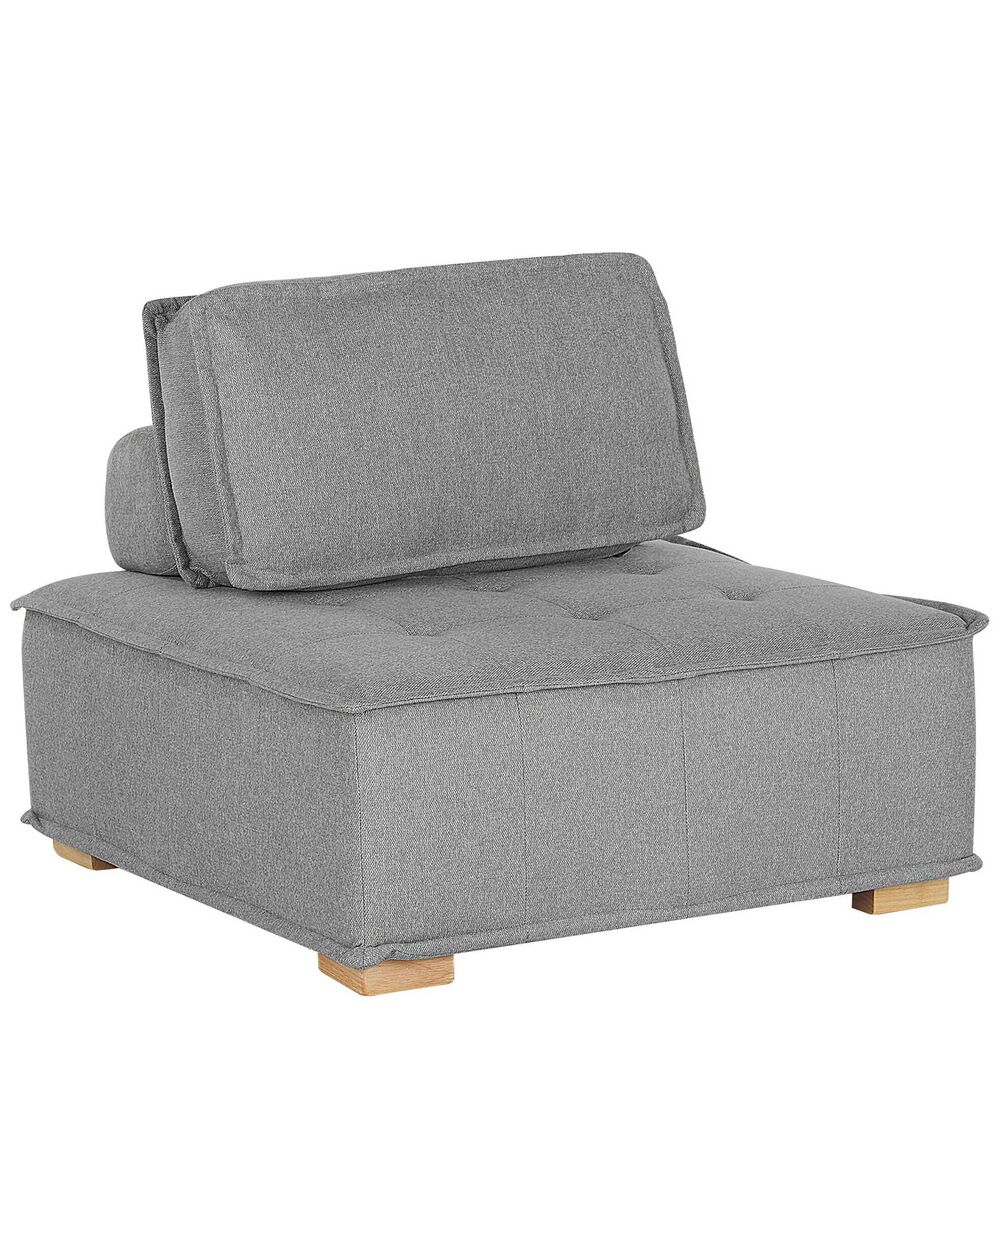 Seduta divano 1 posto in tessuto grigio TIBRO 